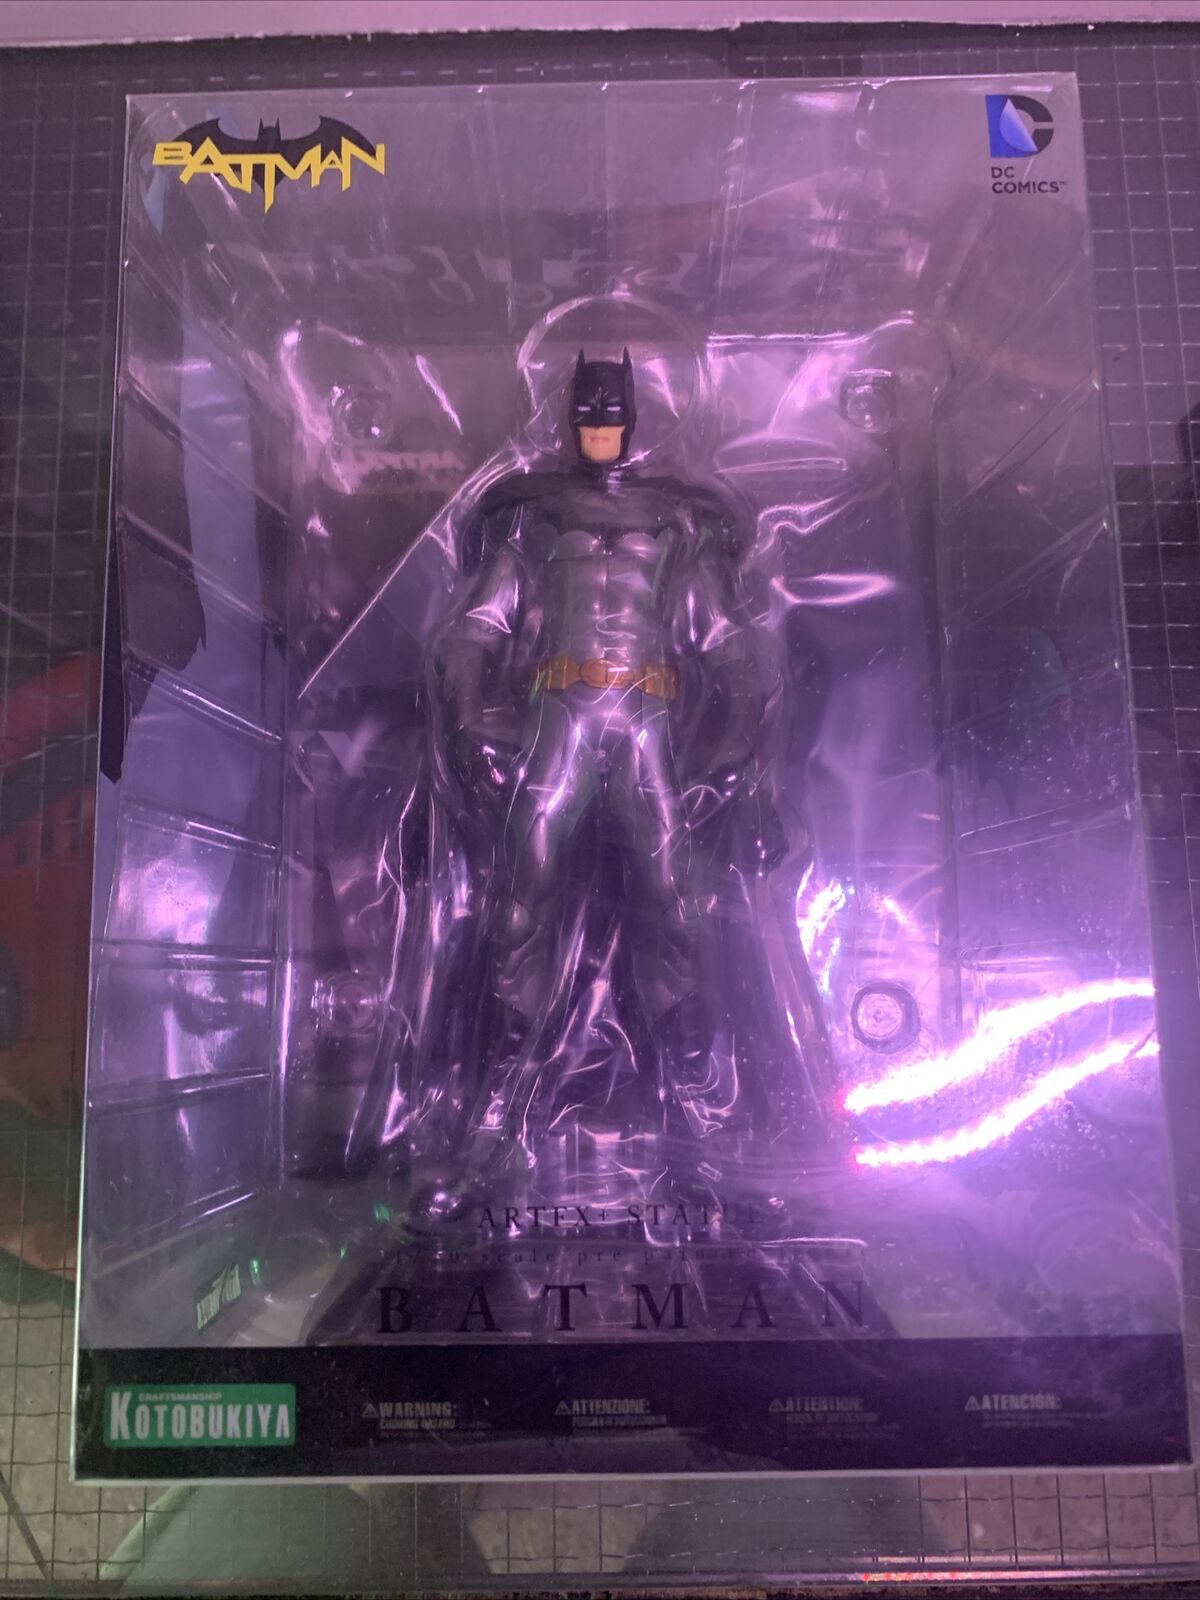 Kotobukiya DC COMICS BATMAN ArtFX Statue/Figure (Brand New) NEW-IN-BOX